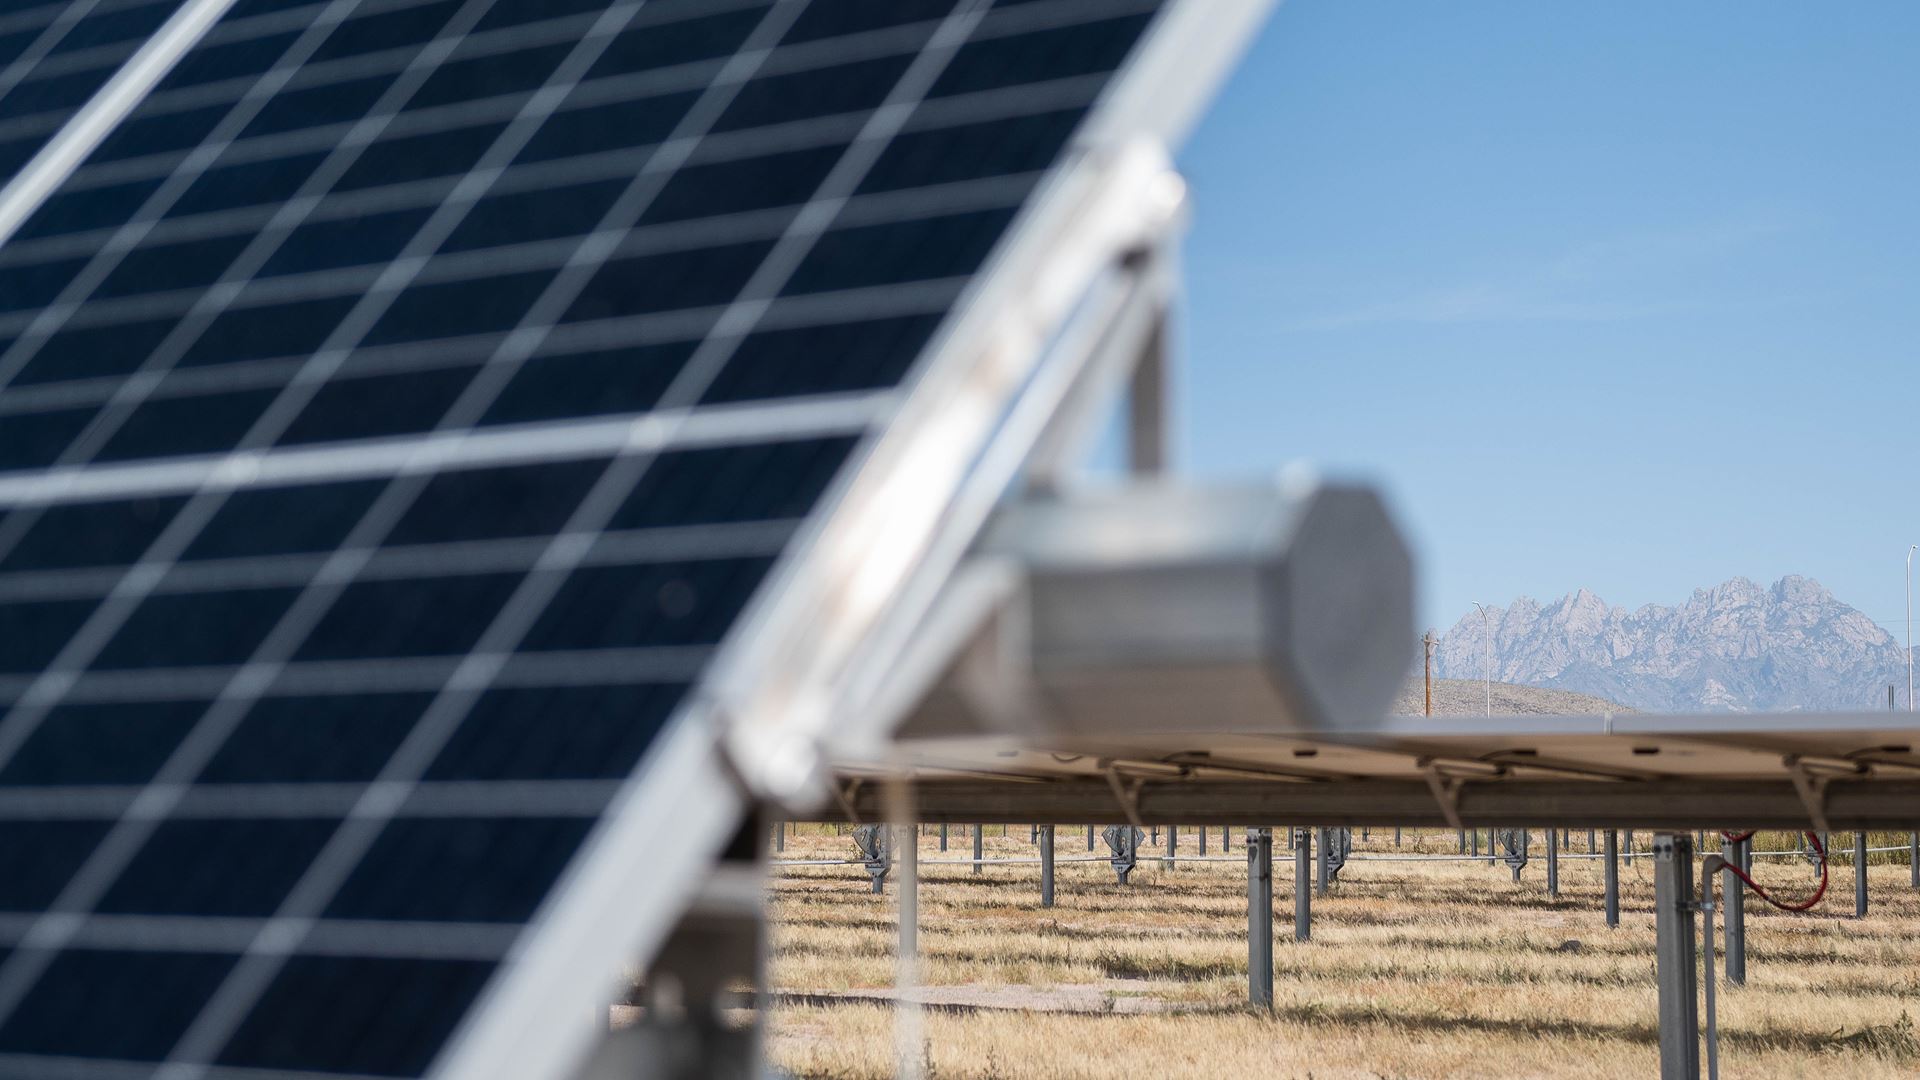 NMSU, El Paso Electric unveil Aggie Power solar project